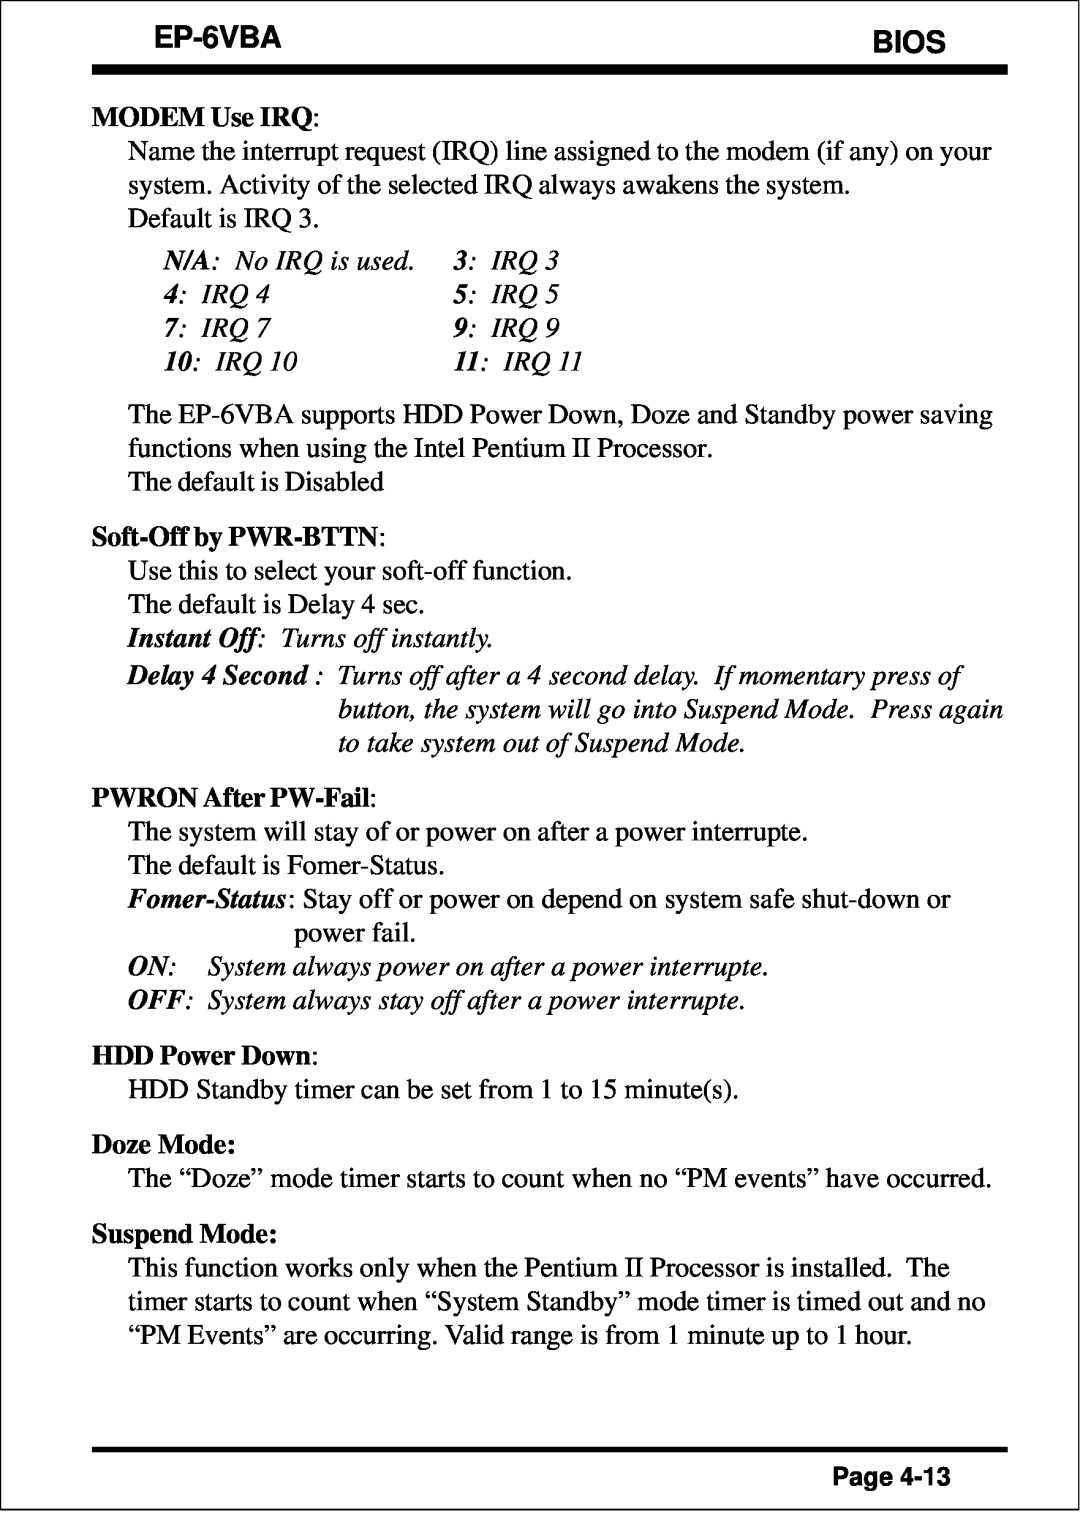 EPoX Computer EP-6VBA Bios, MODEM Use IRQ, Soft-Off by PWR-BTTN, PWRON After PW-Fail, HDD Power Down, Doze Mode 